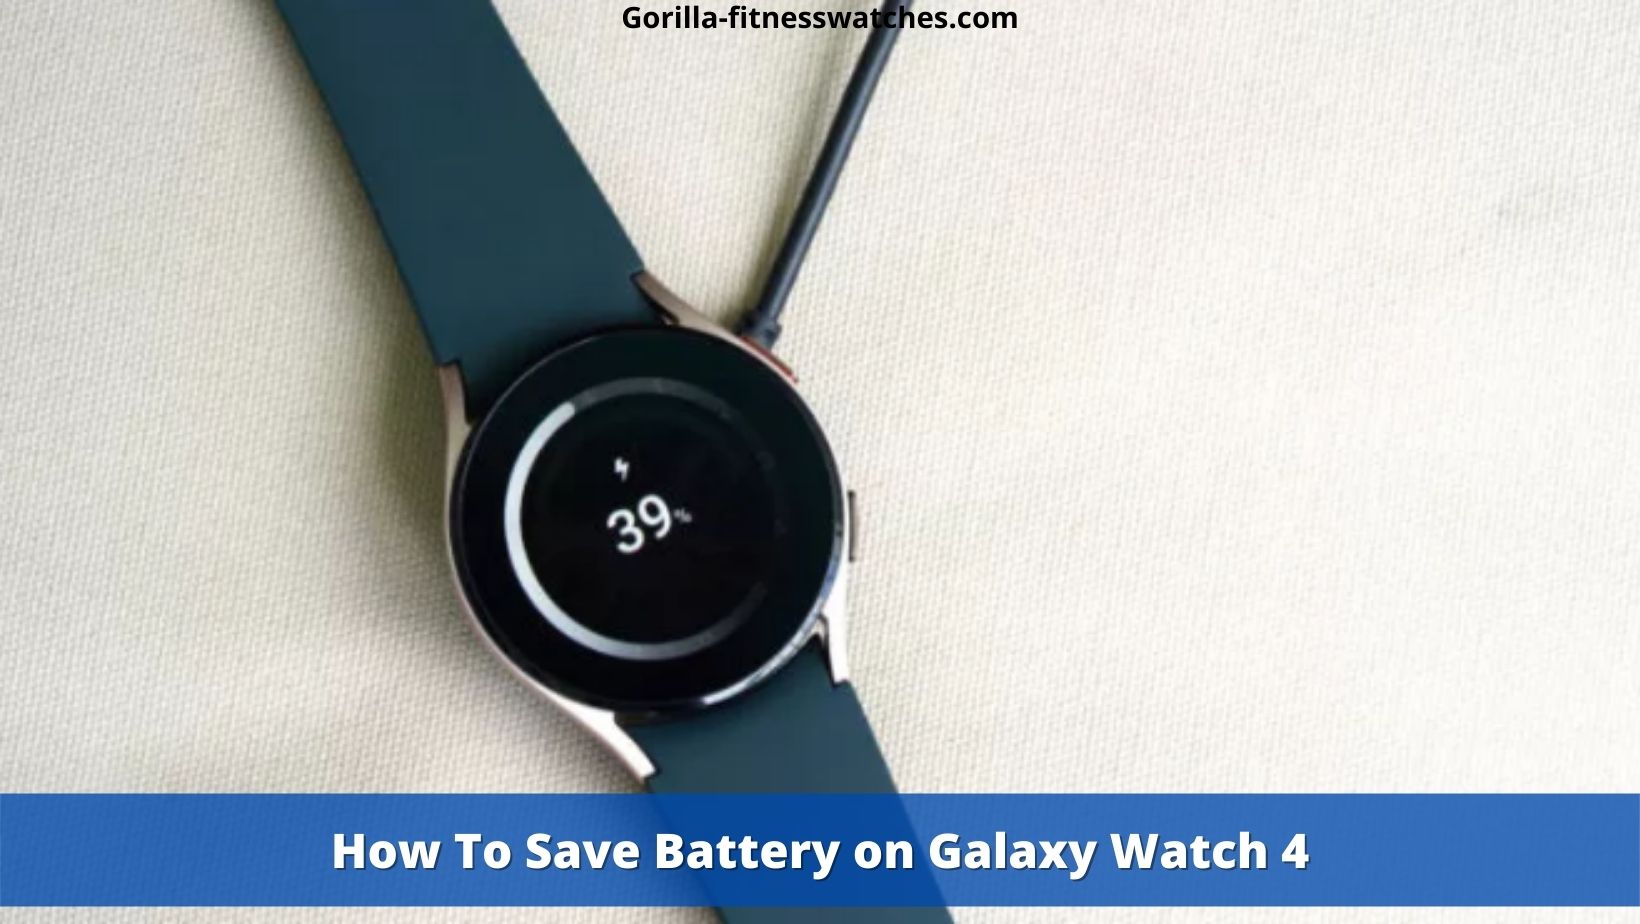 Save Battery on Galaxy Watch 4